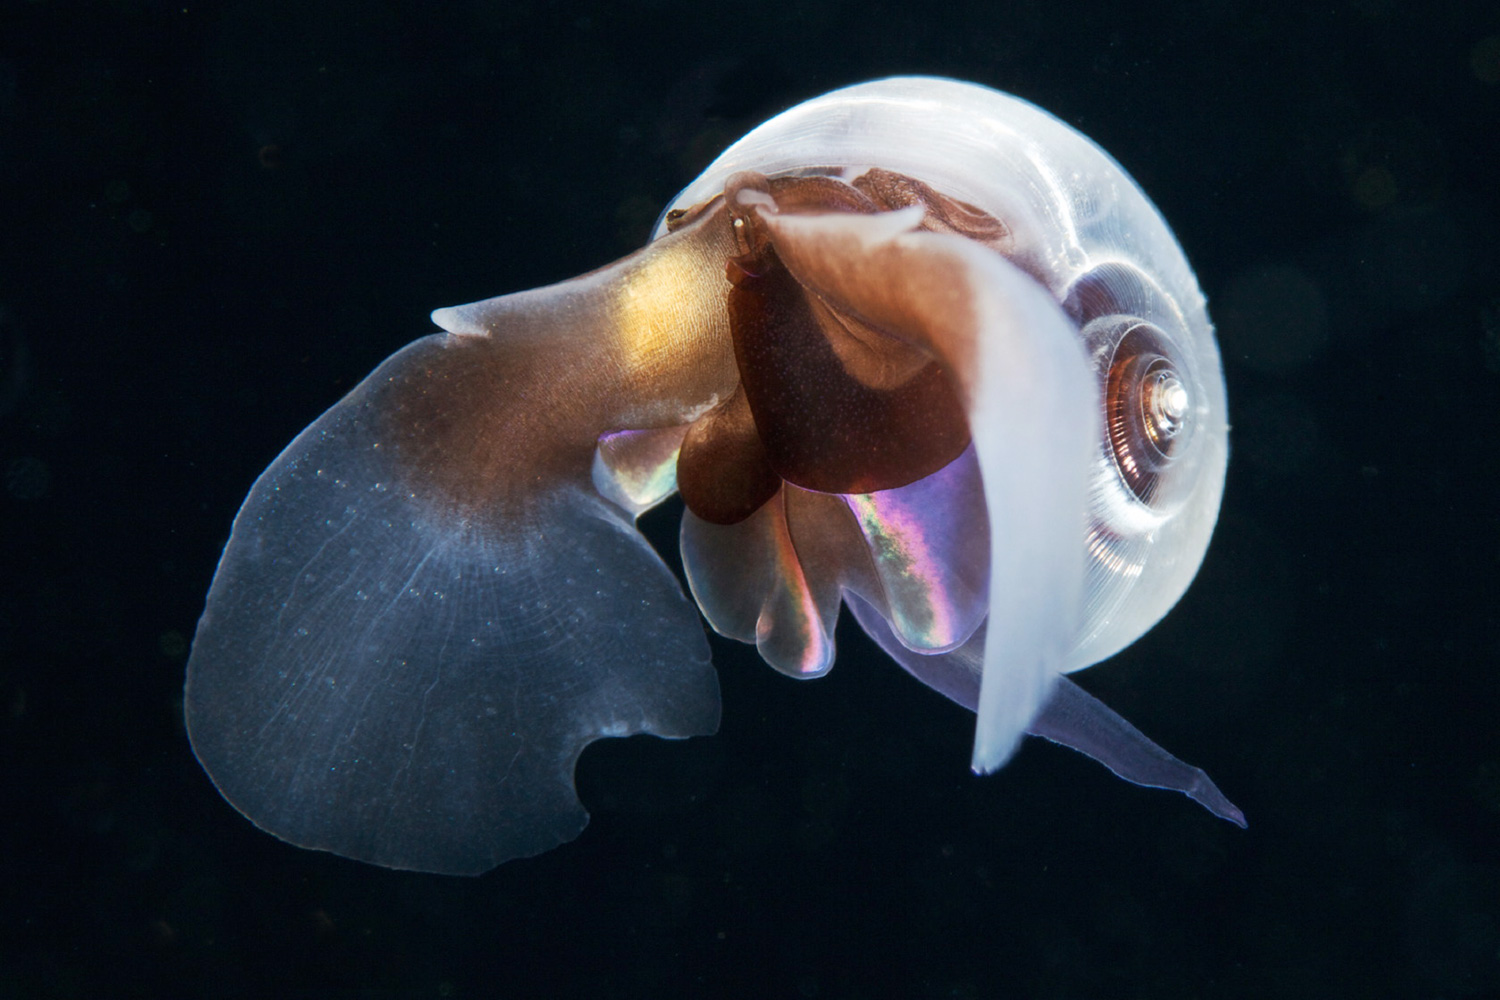 Pteropod mollusk Limacina helicina